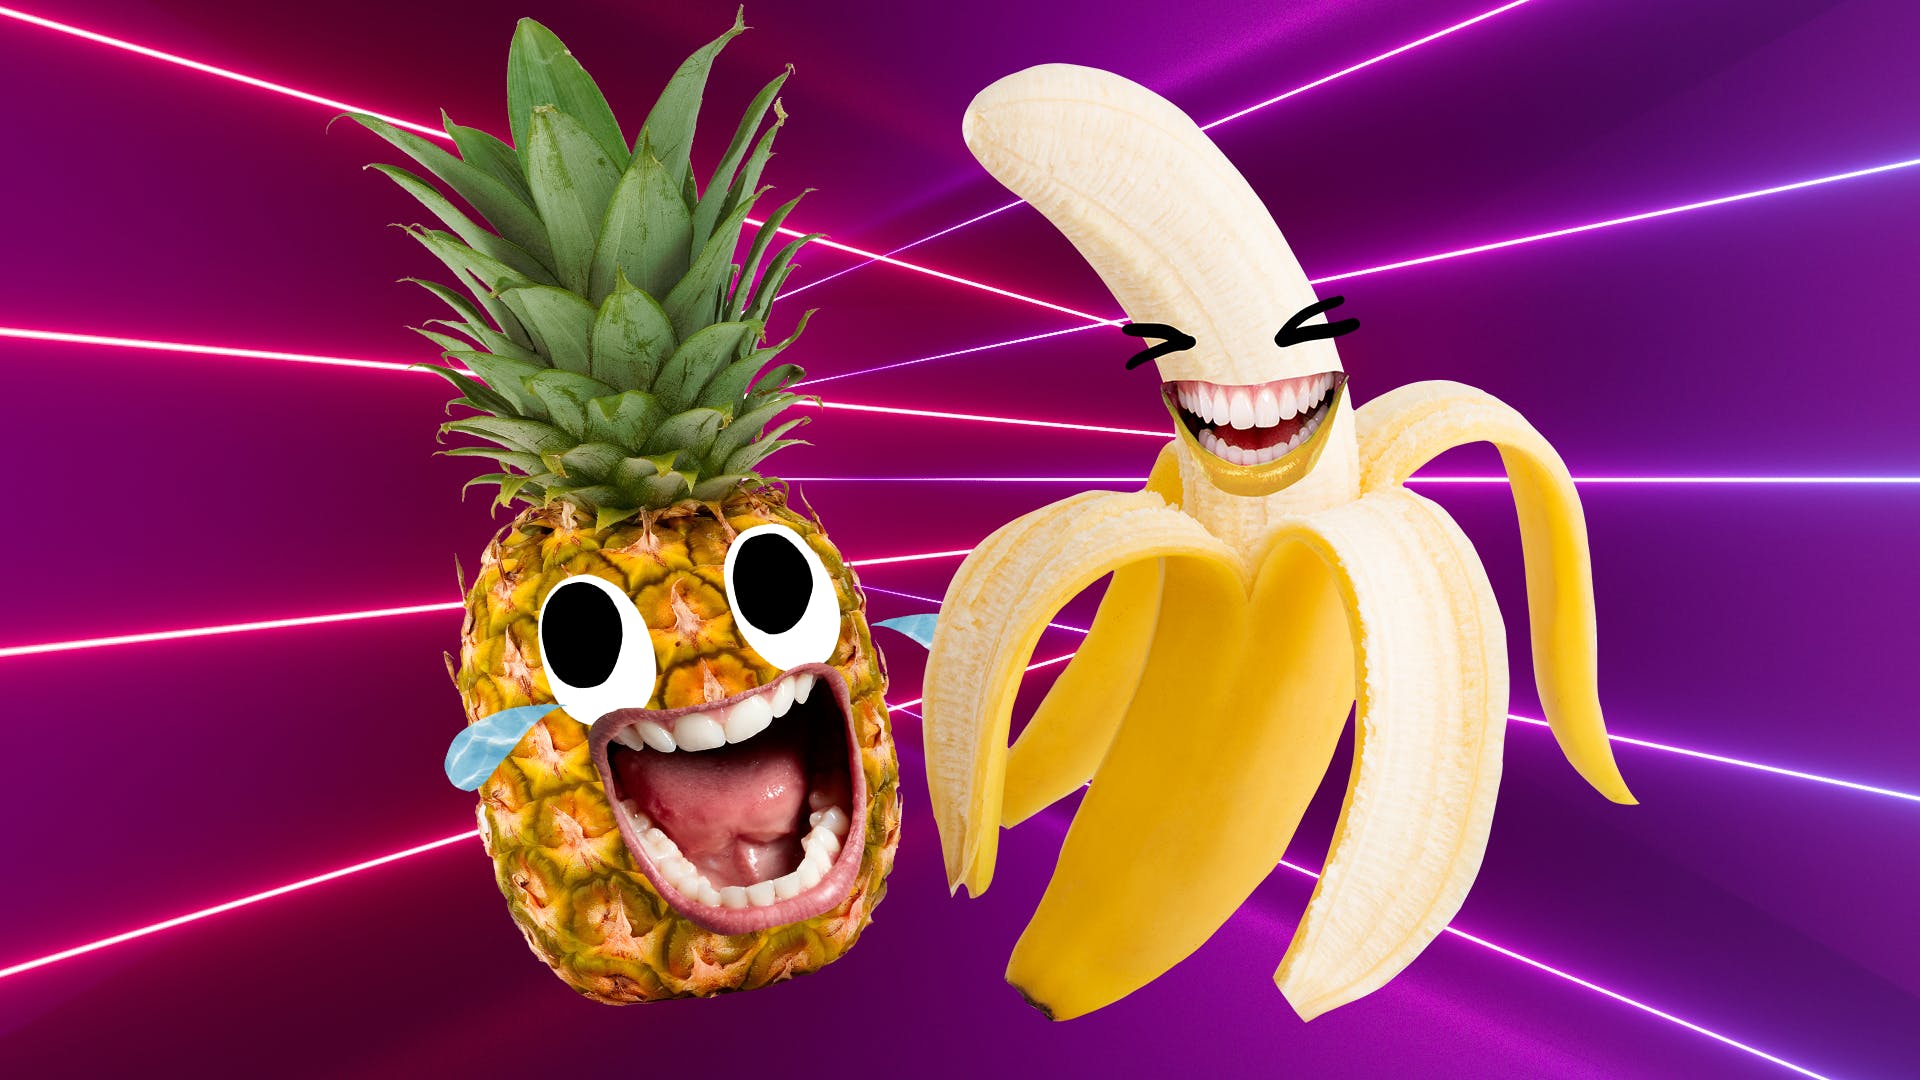 Laughing pineapple and banana